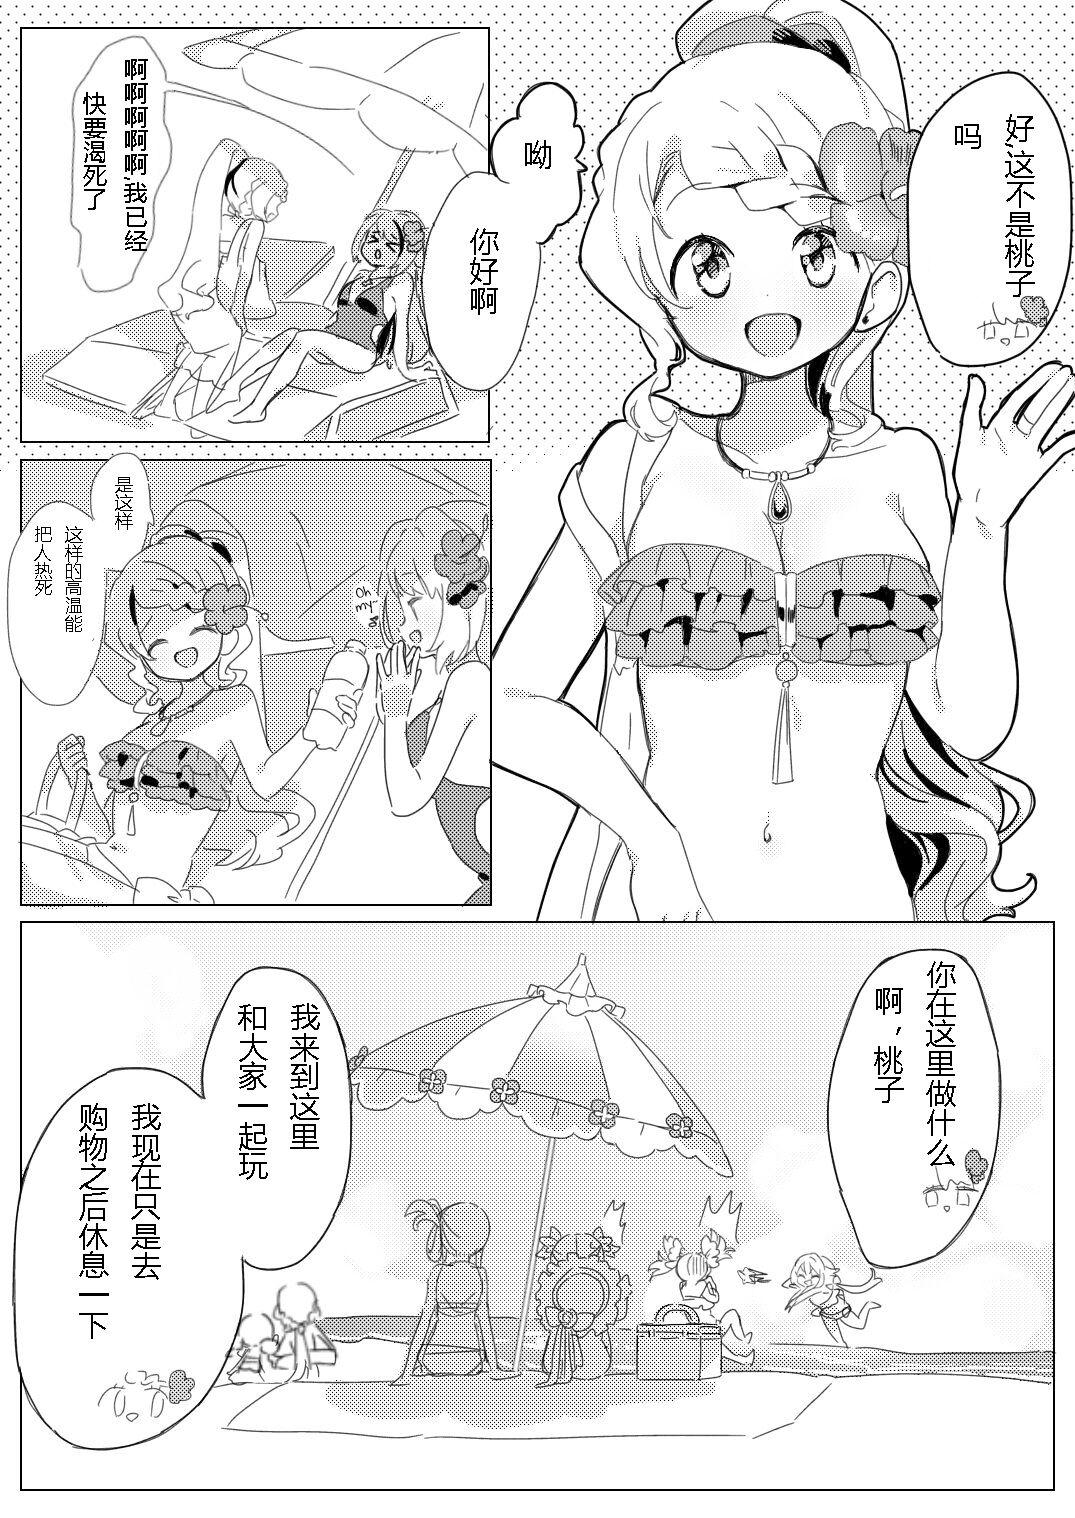 Backshots Manatsu no Drink Challenge - Puella magi madoka magica side story magia record Pool - Page 4